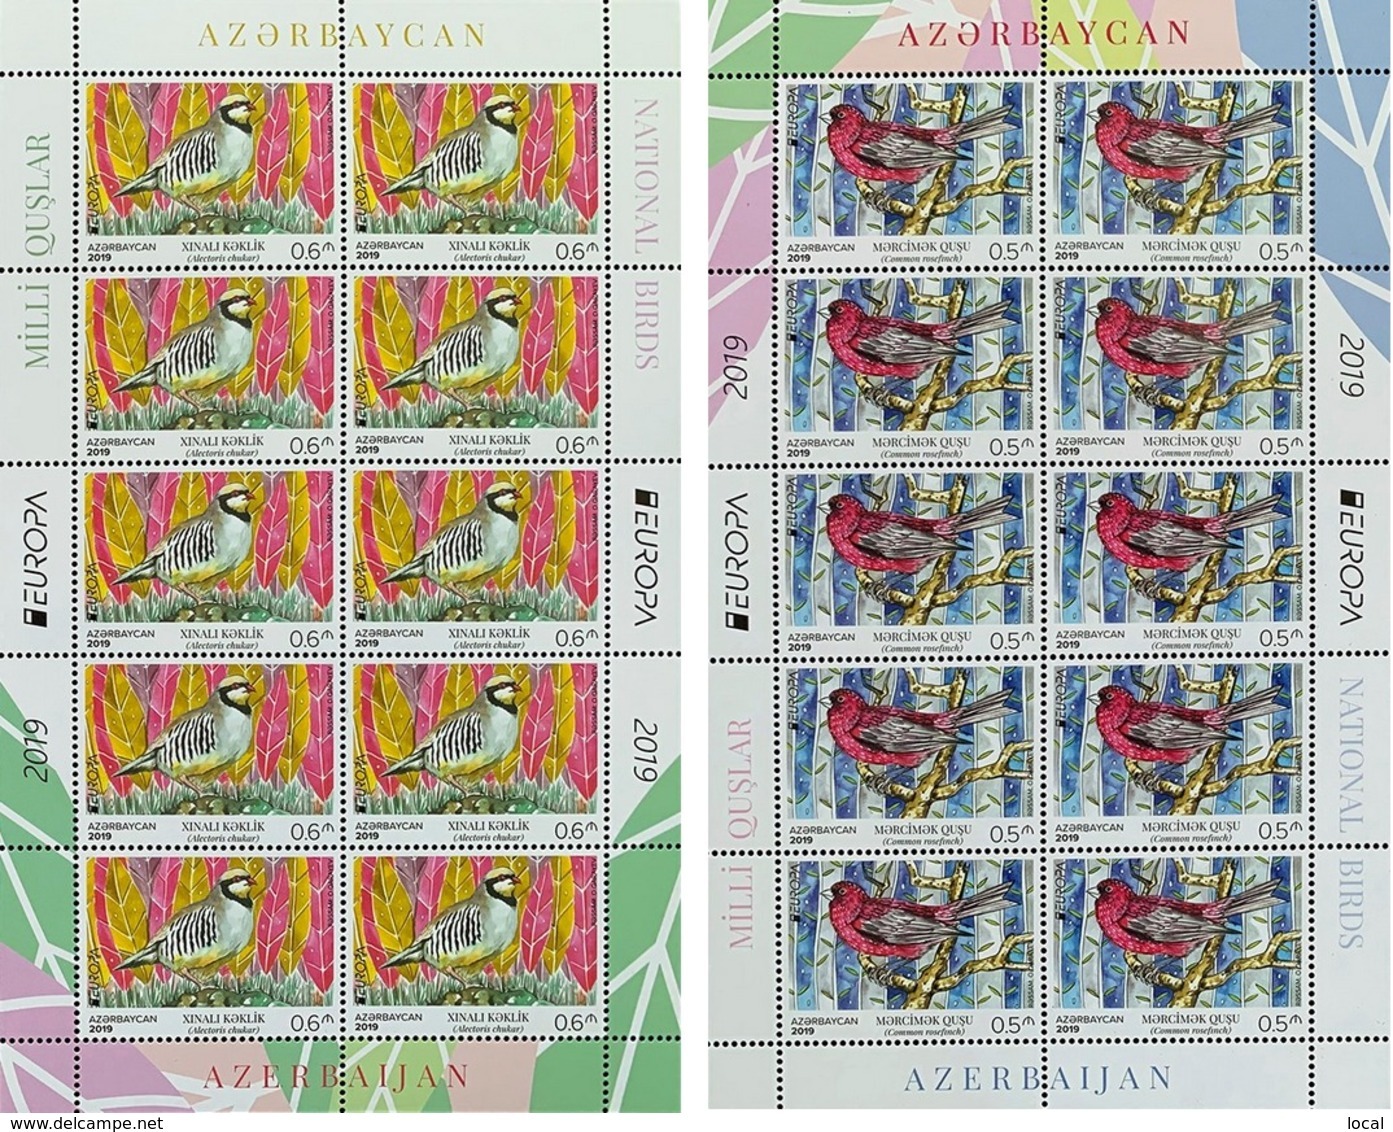 EUROPA 2019. NATIONAL BIRDS. Azerbaijan Stamps 2019. 2 Full Sheets Europe 2019 - 2019